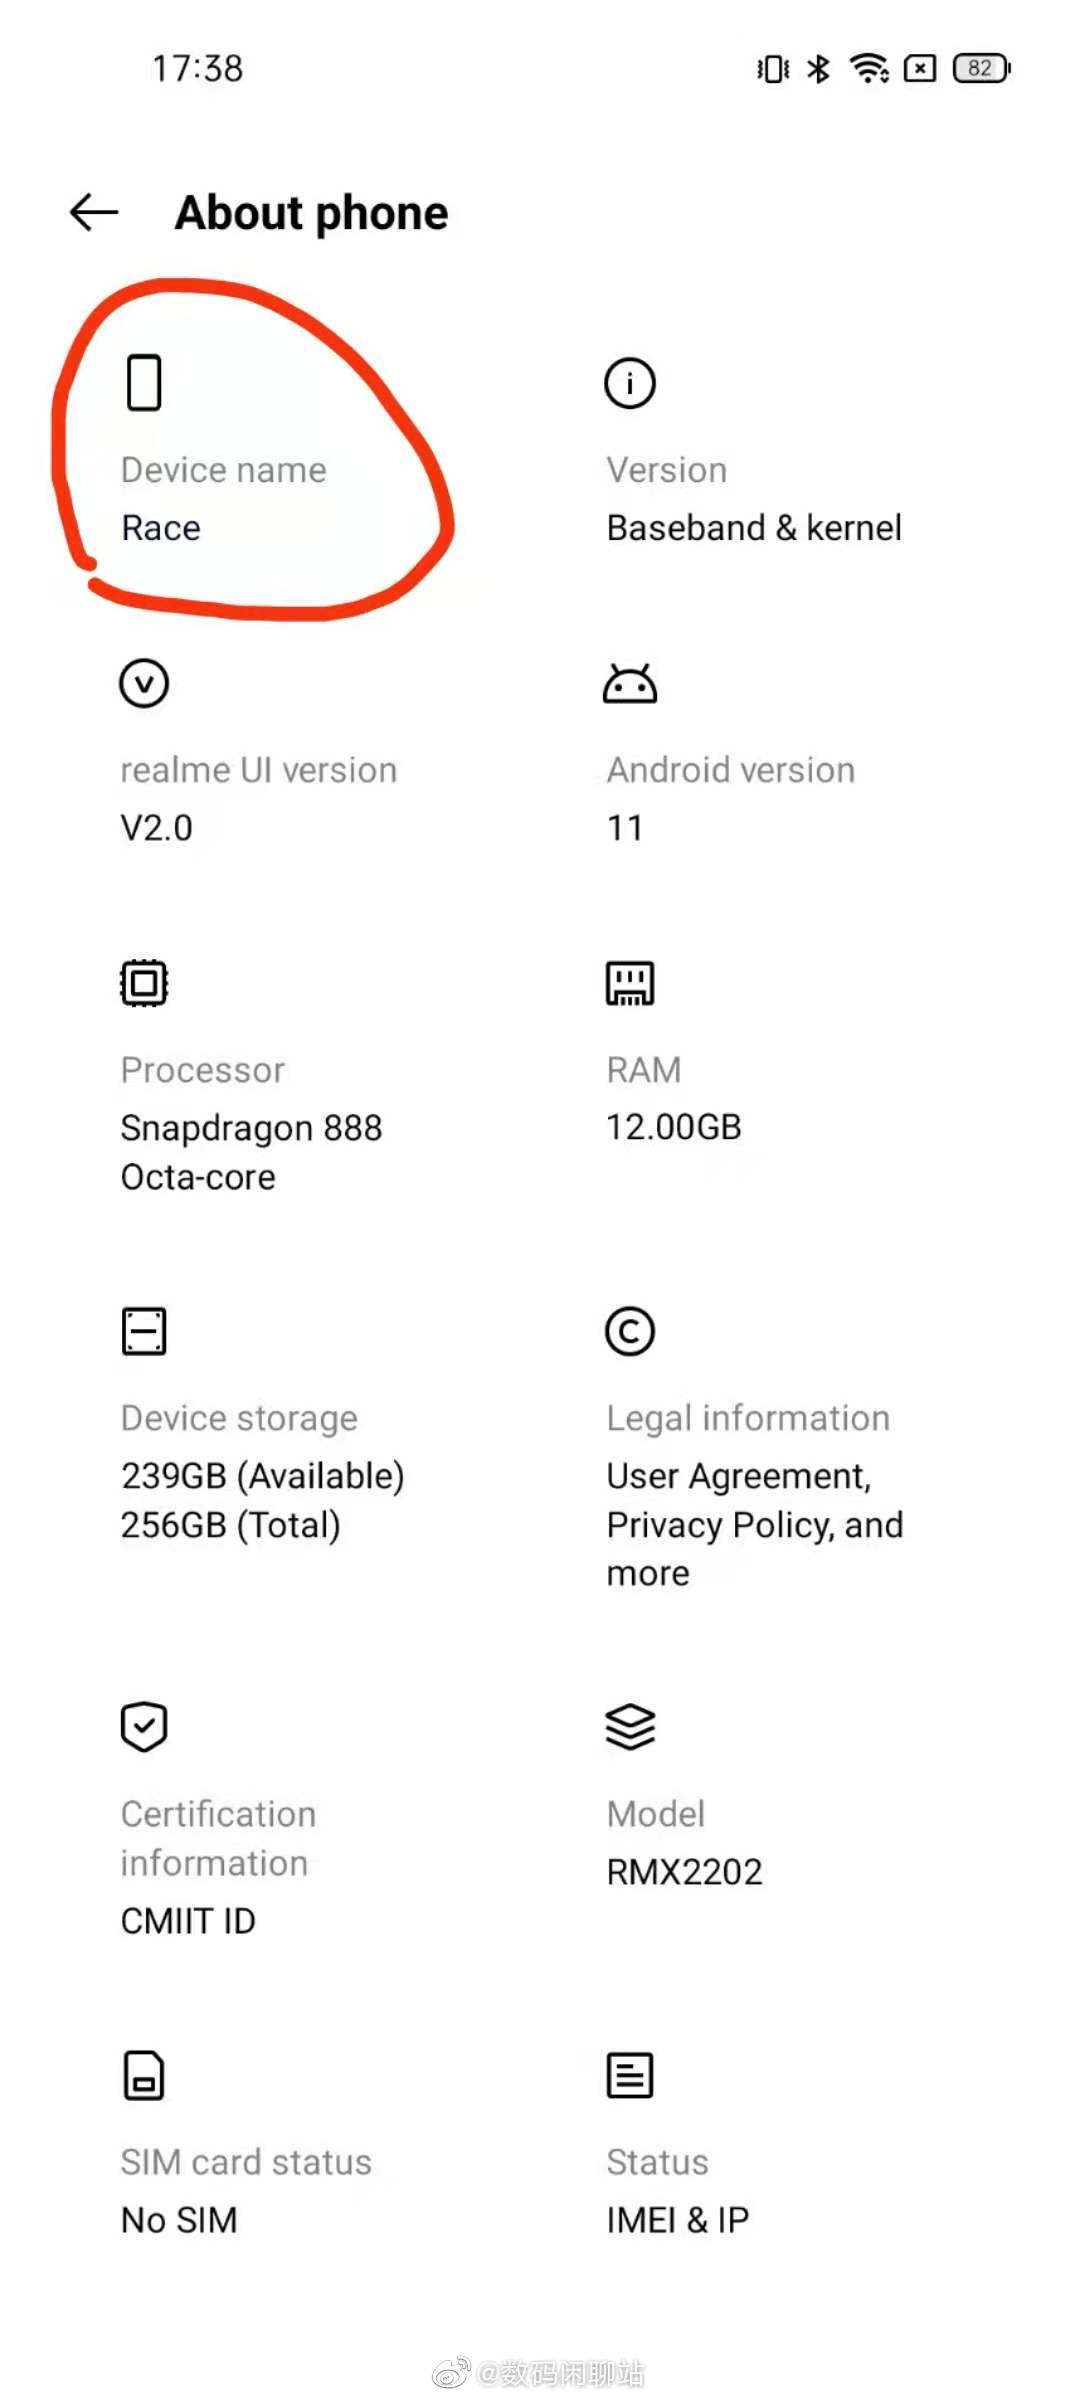 Snapdragon 888 SoC: List of Snapdragon 888 phones